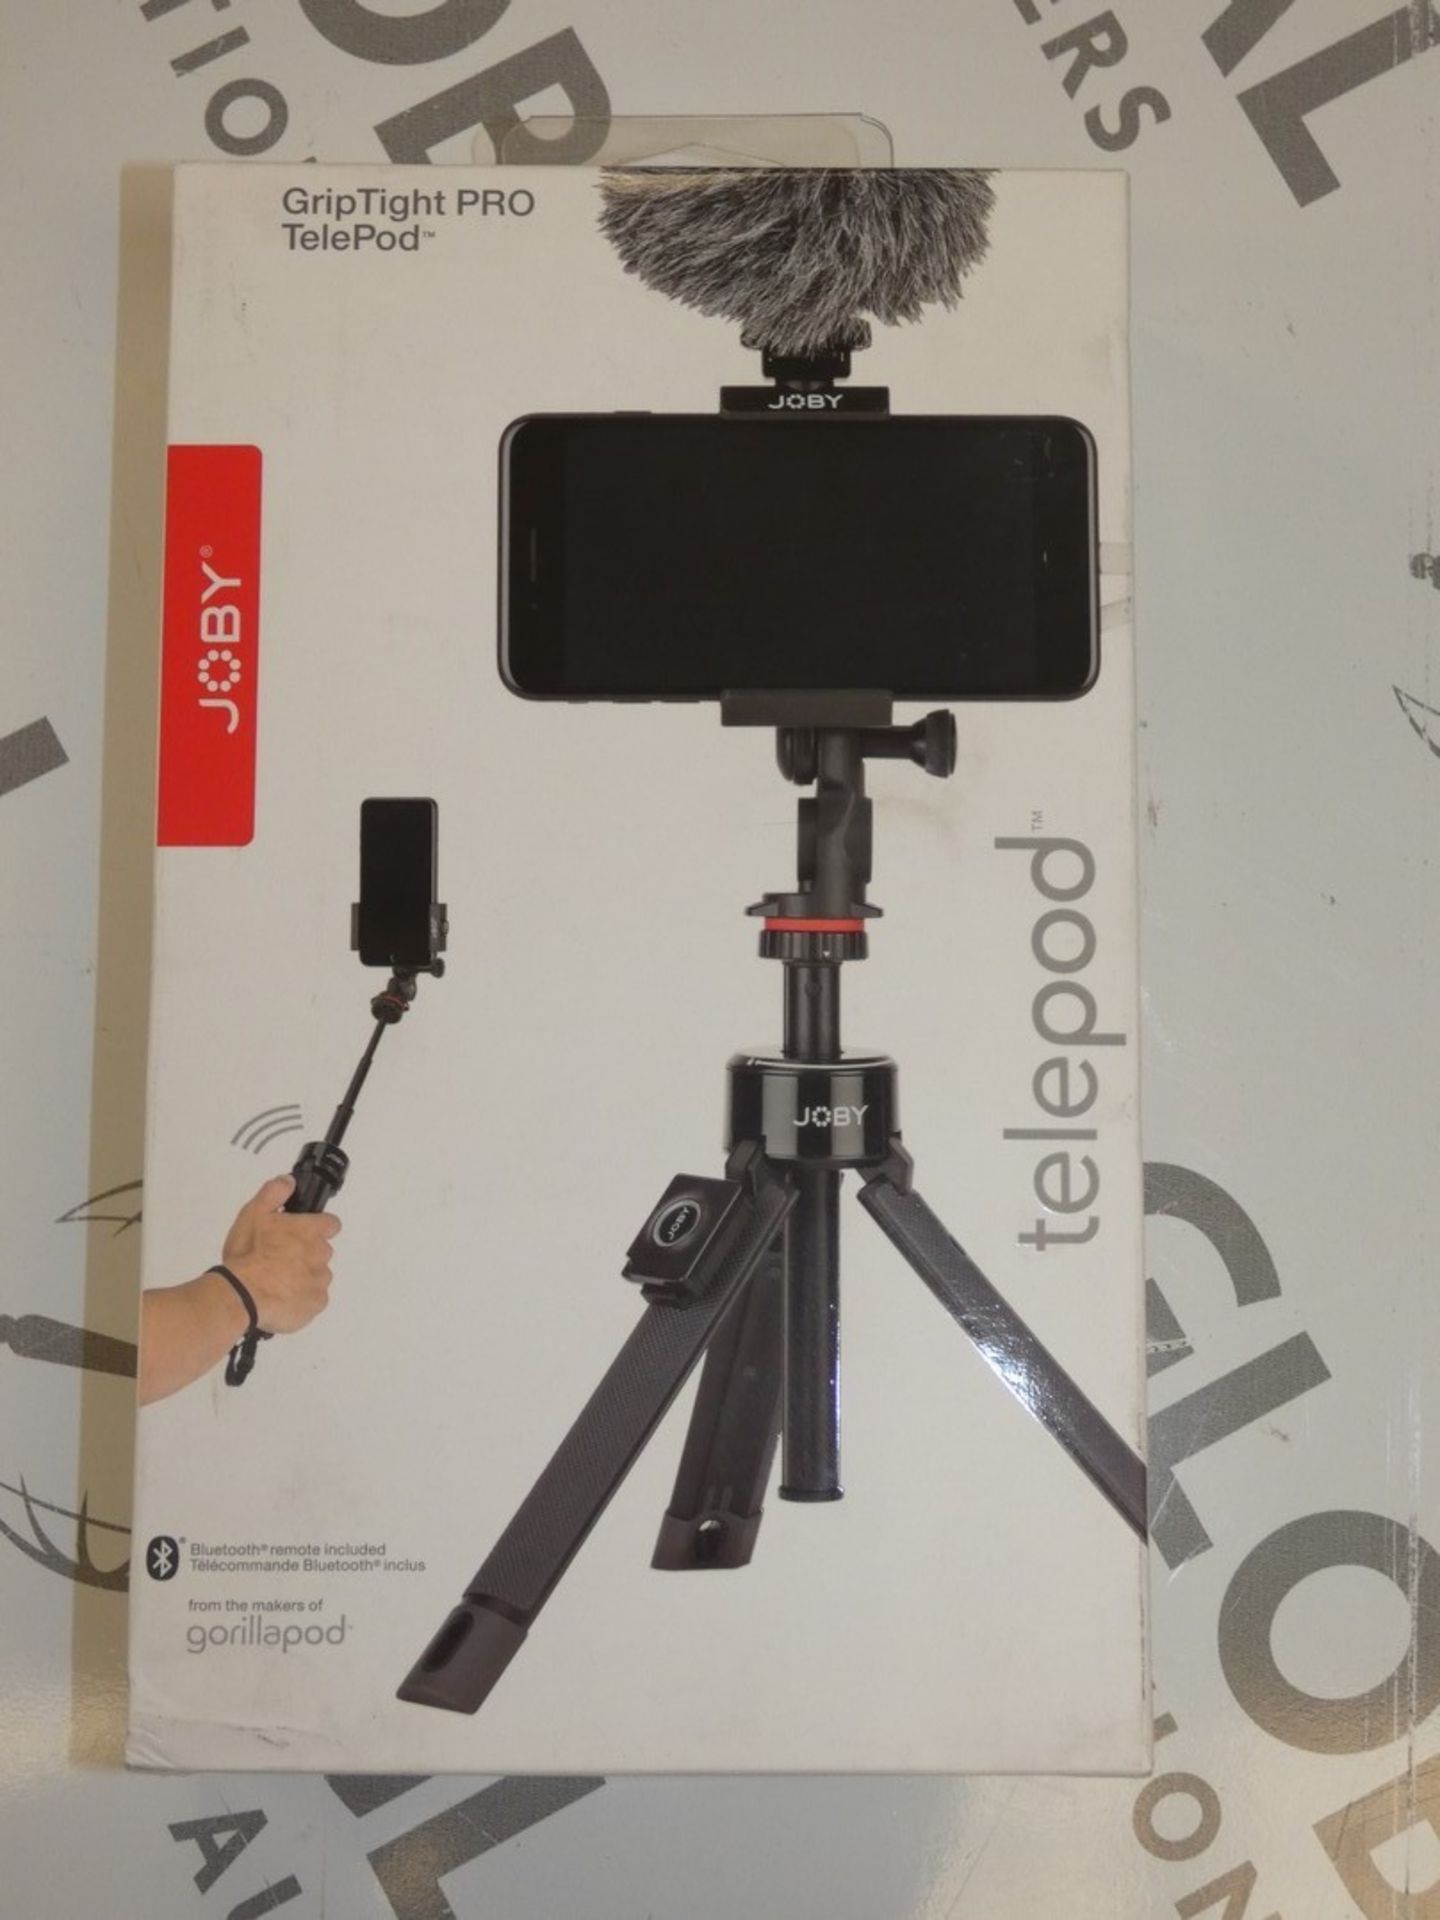 Boxed Joby Telepod Grip Tight Pro RRP £100 (553)